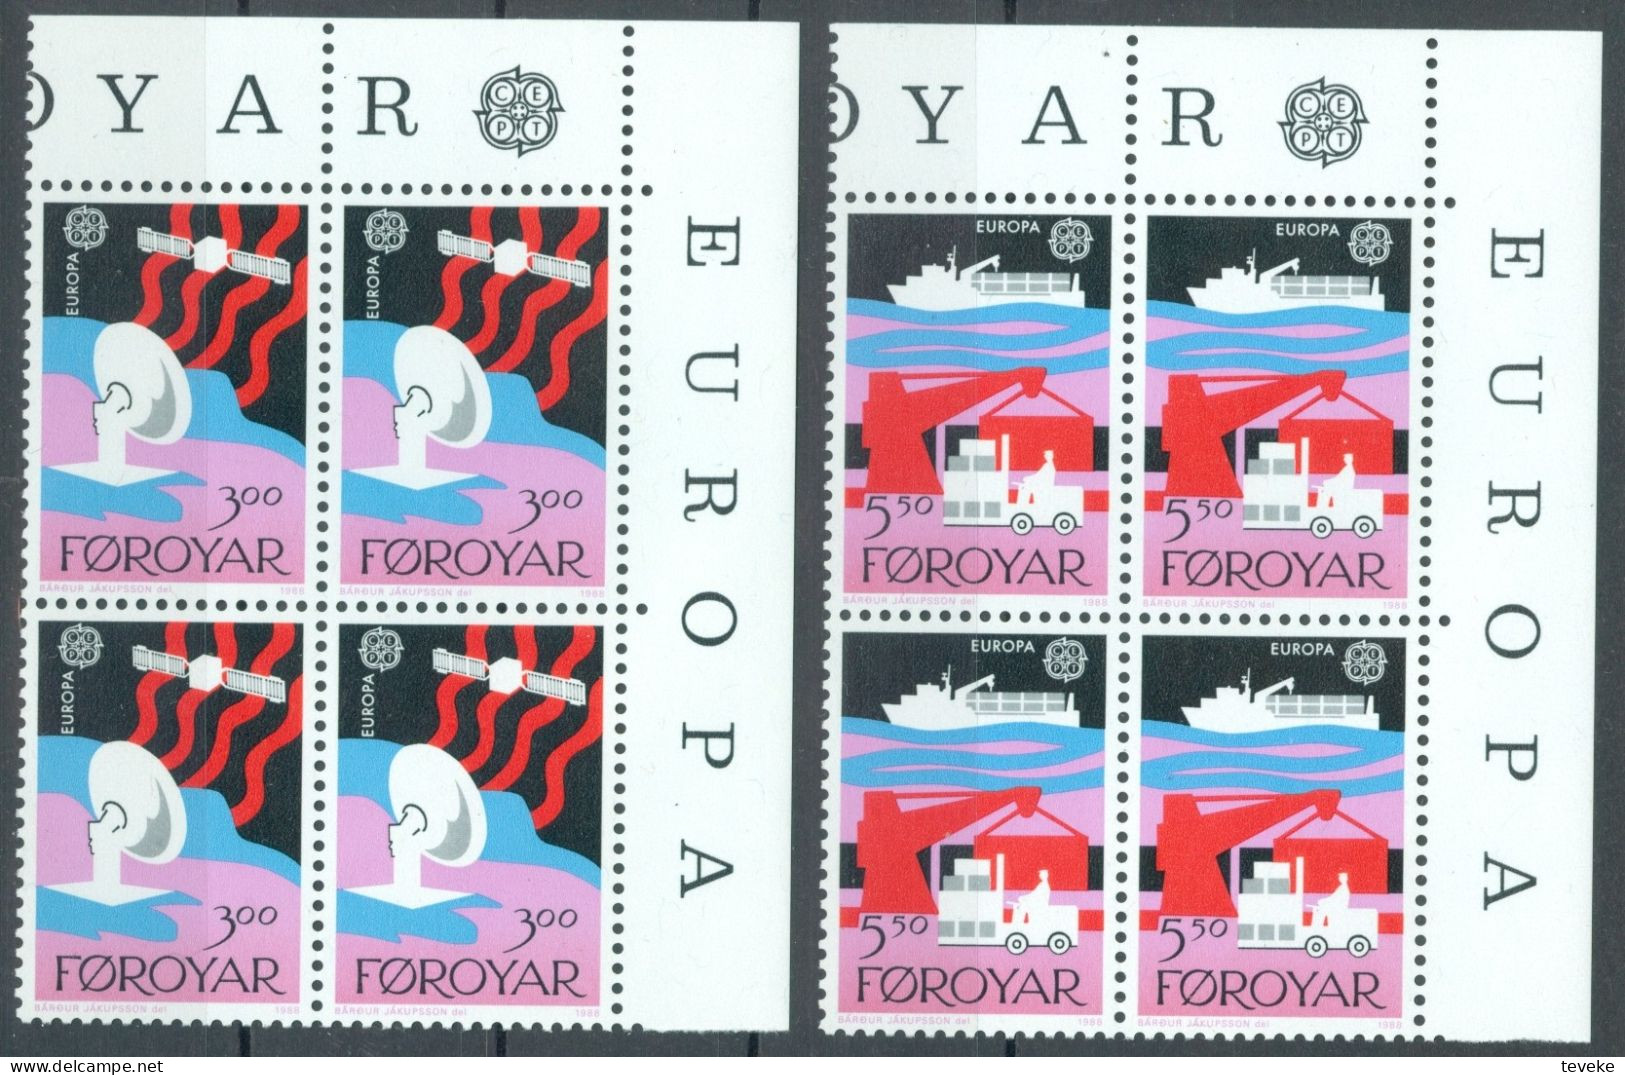 FAEROËR 1988 - MiNr. 166/167 BL4 - **/MNH - Europa/CEPT - Transport And Communication - Faroe Islands